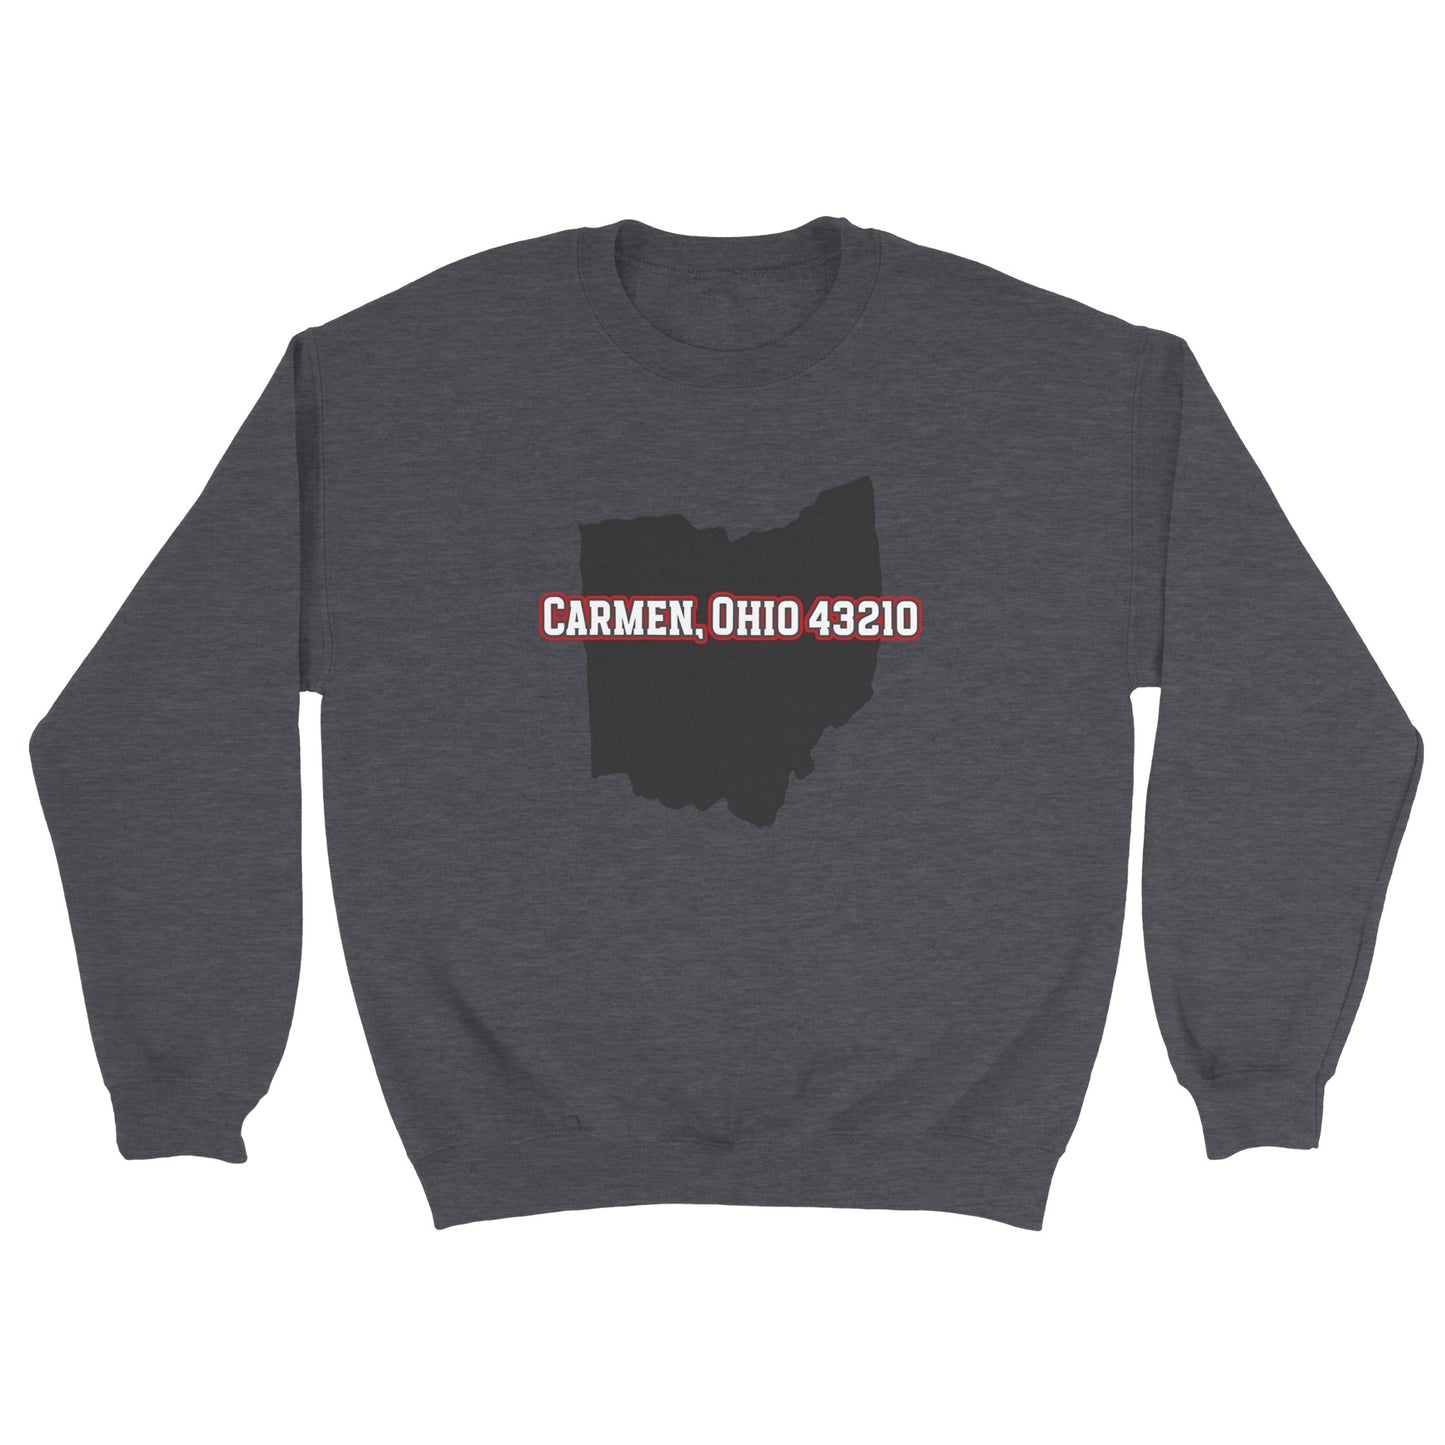 The Shoe Design Classic Unisex Crewneck Sweatshirt